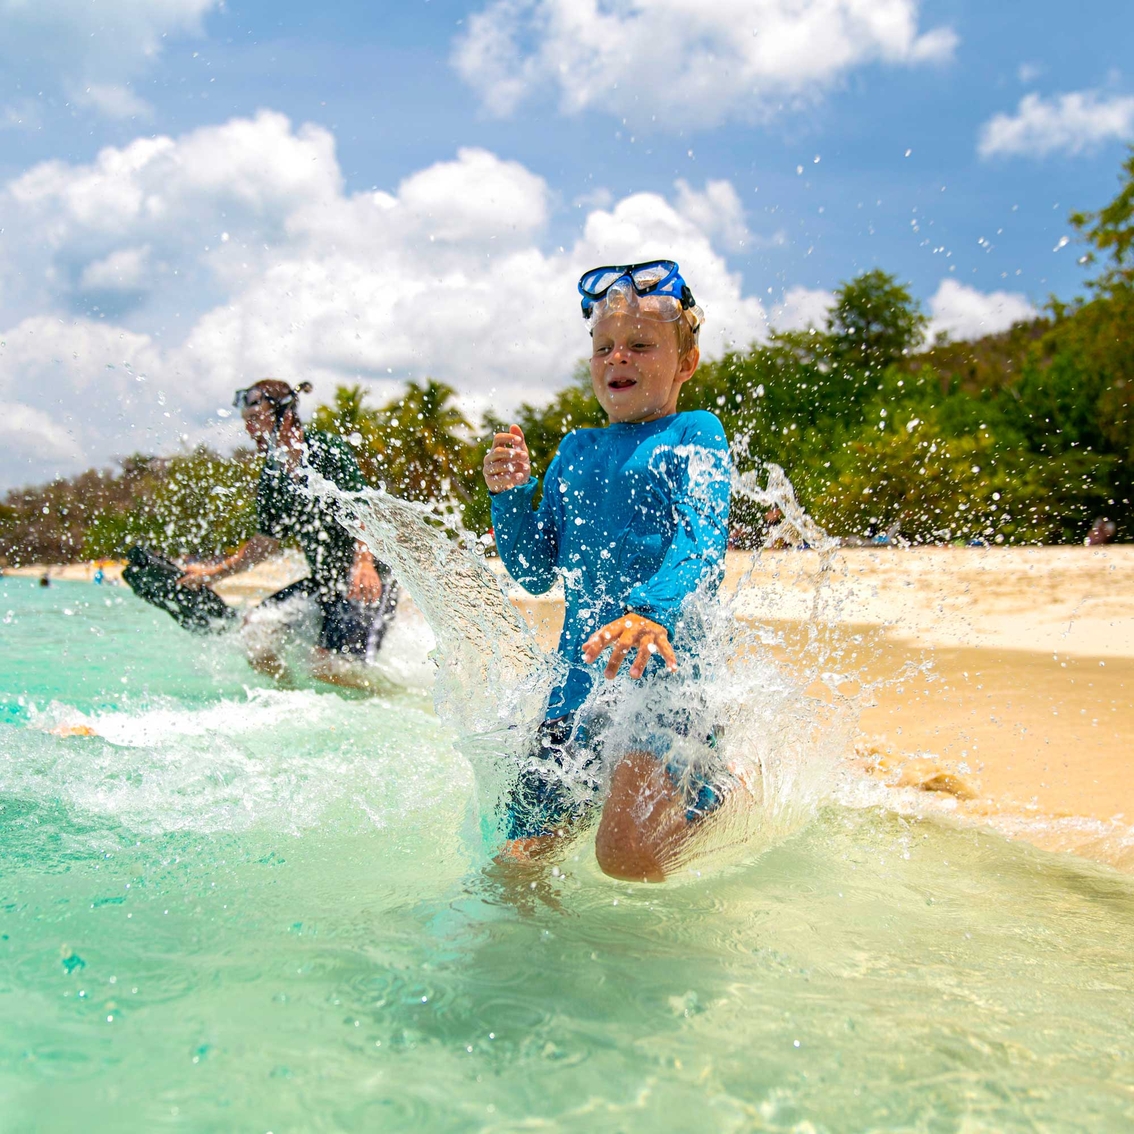 Dorado Jr Combo - Snorkeling Mask+Snorkel Combo for Kids